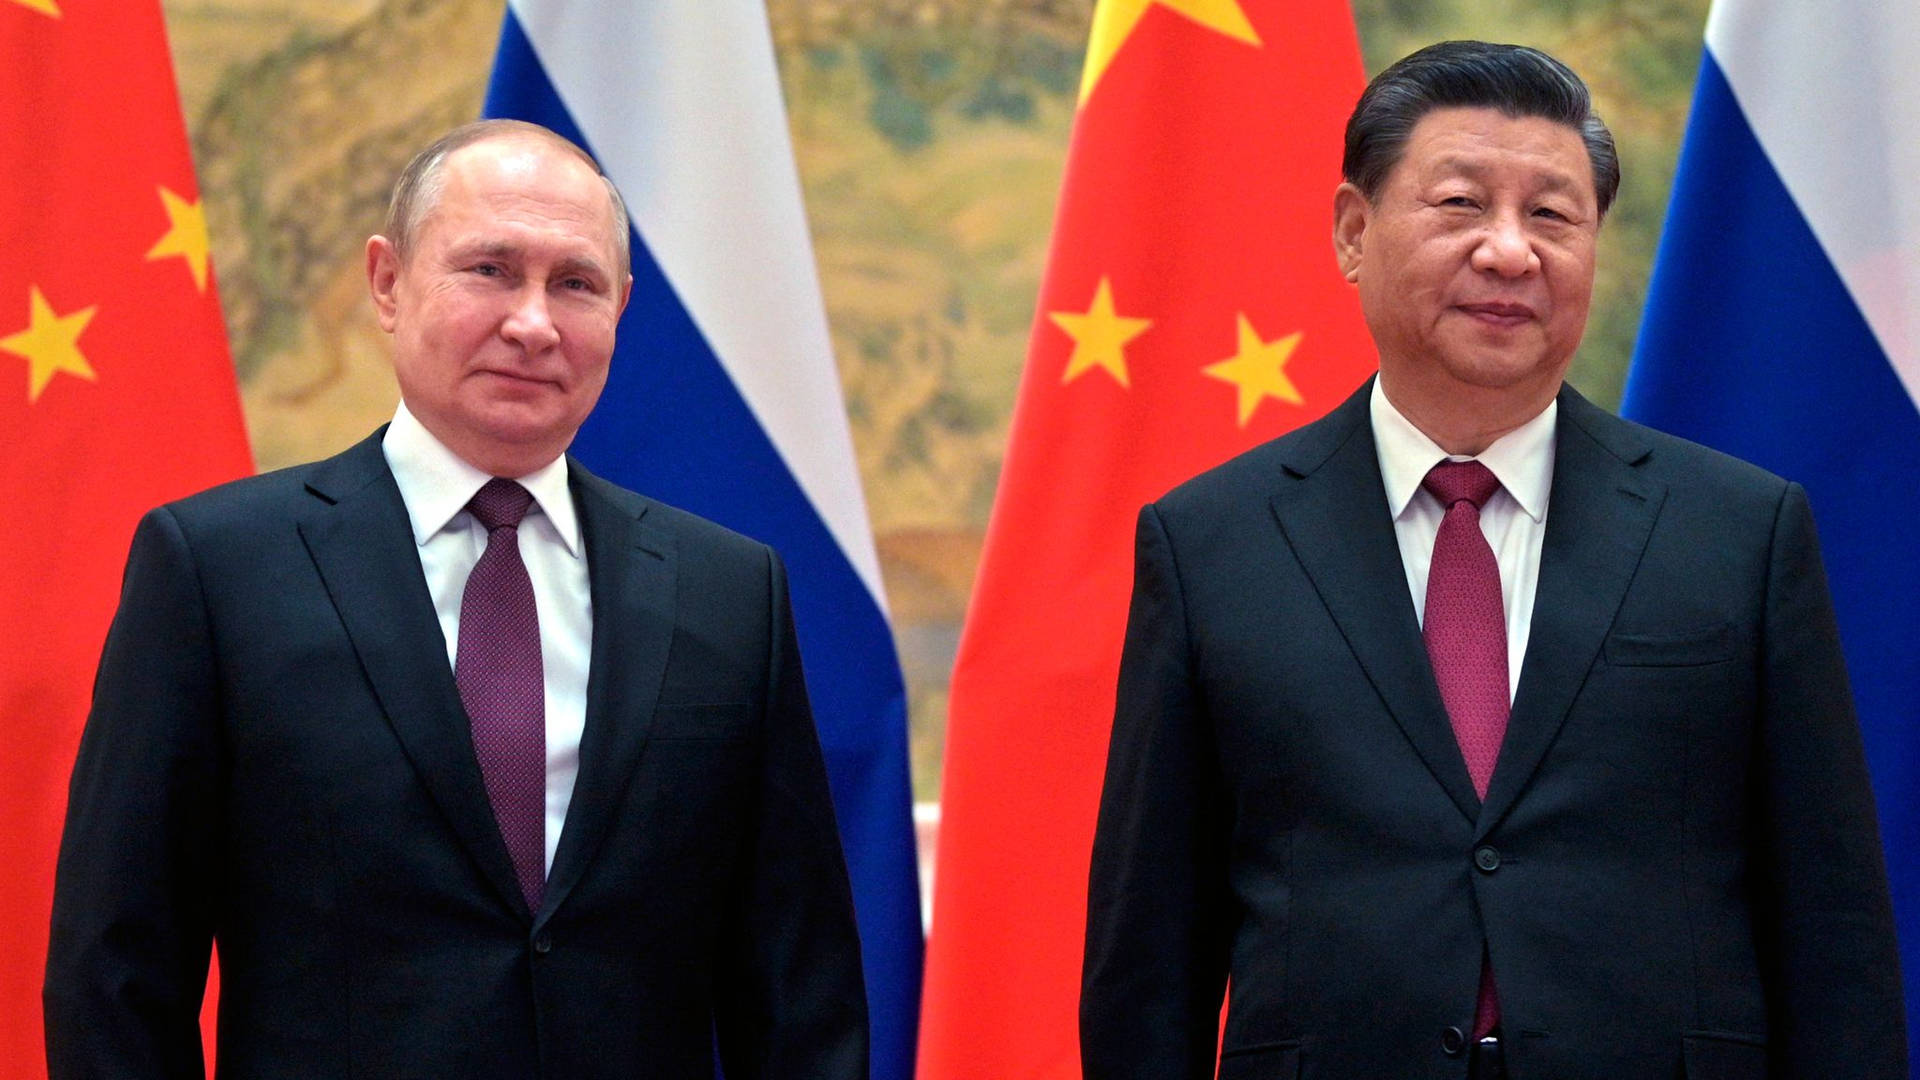 Half-body Photo Vladimir Putin And Xi Jinping Background